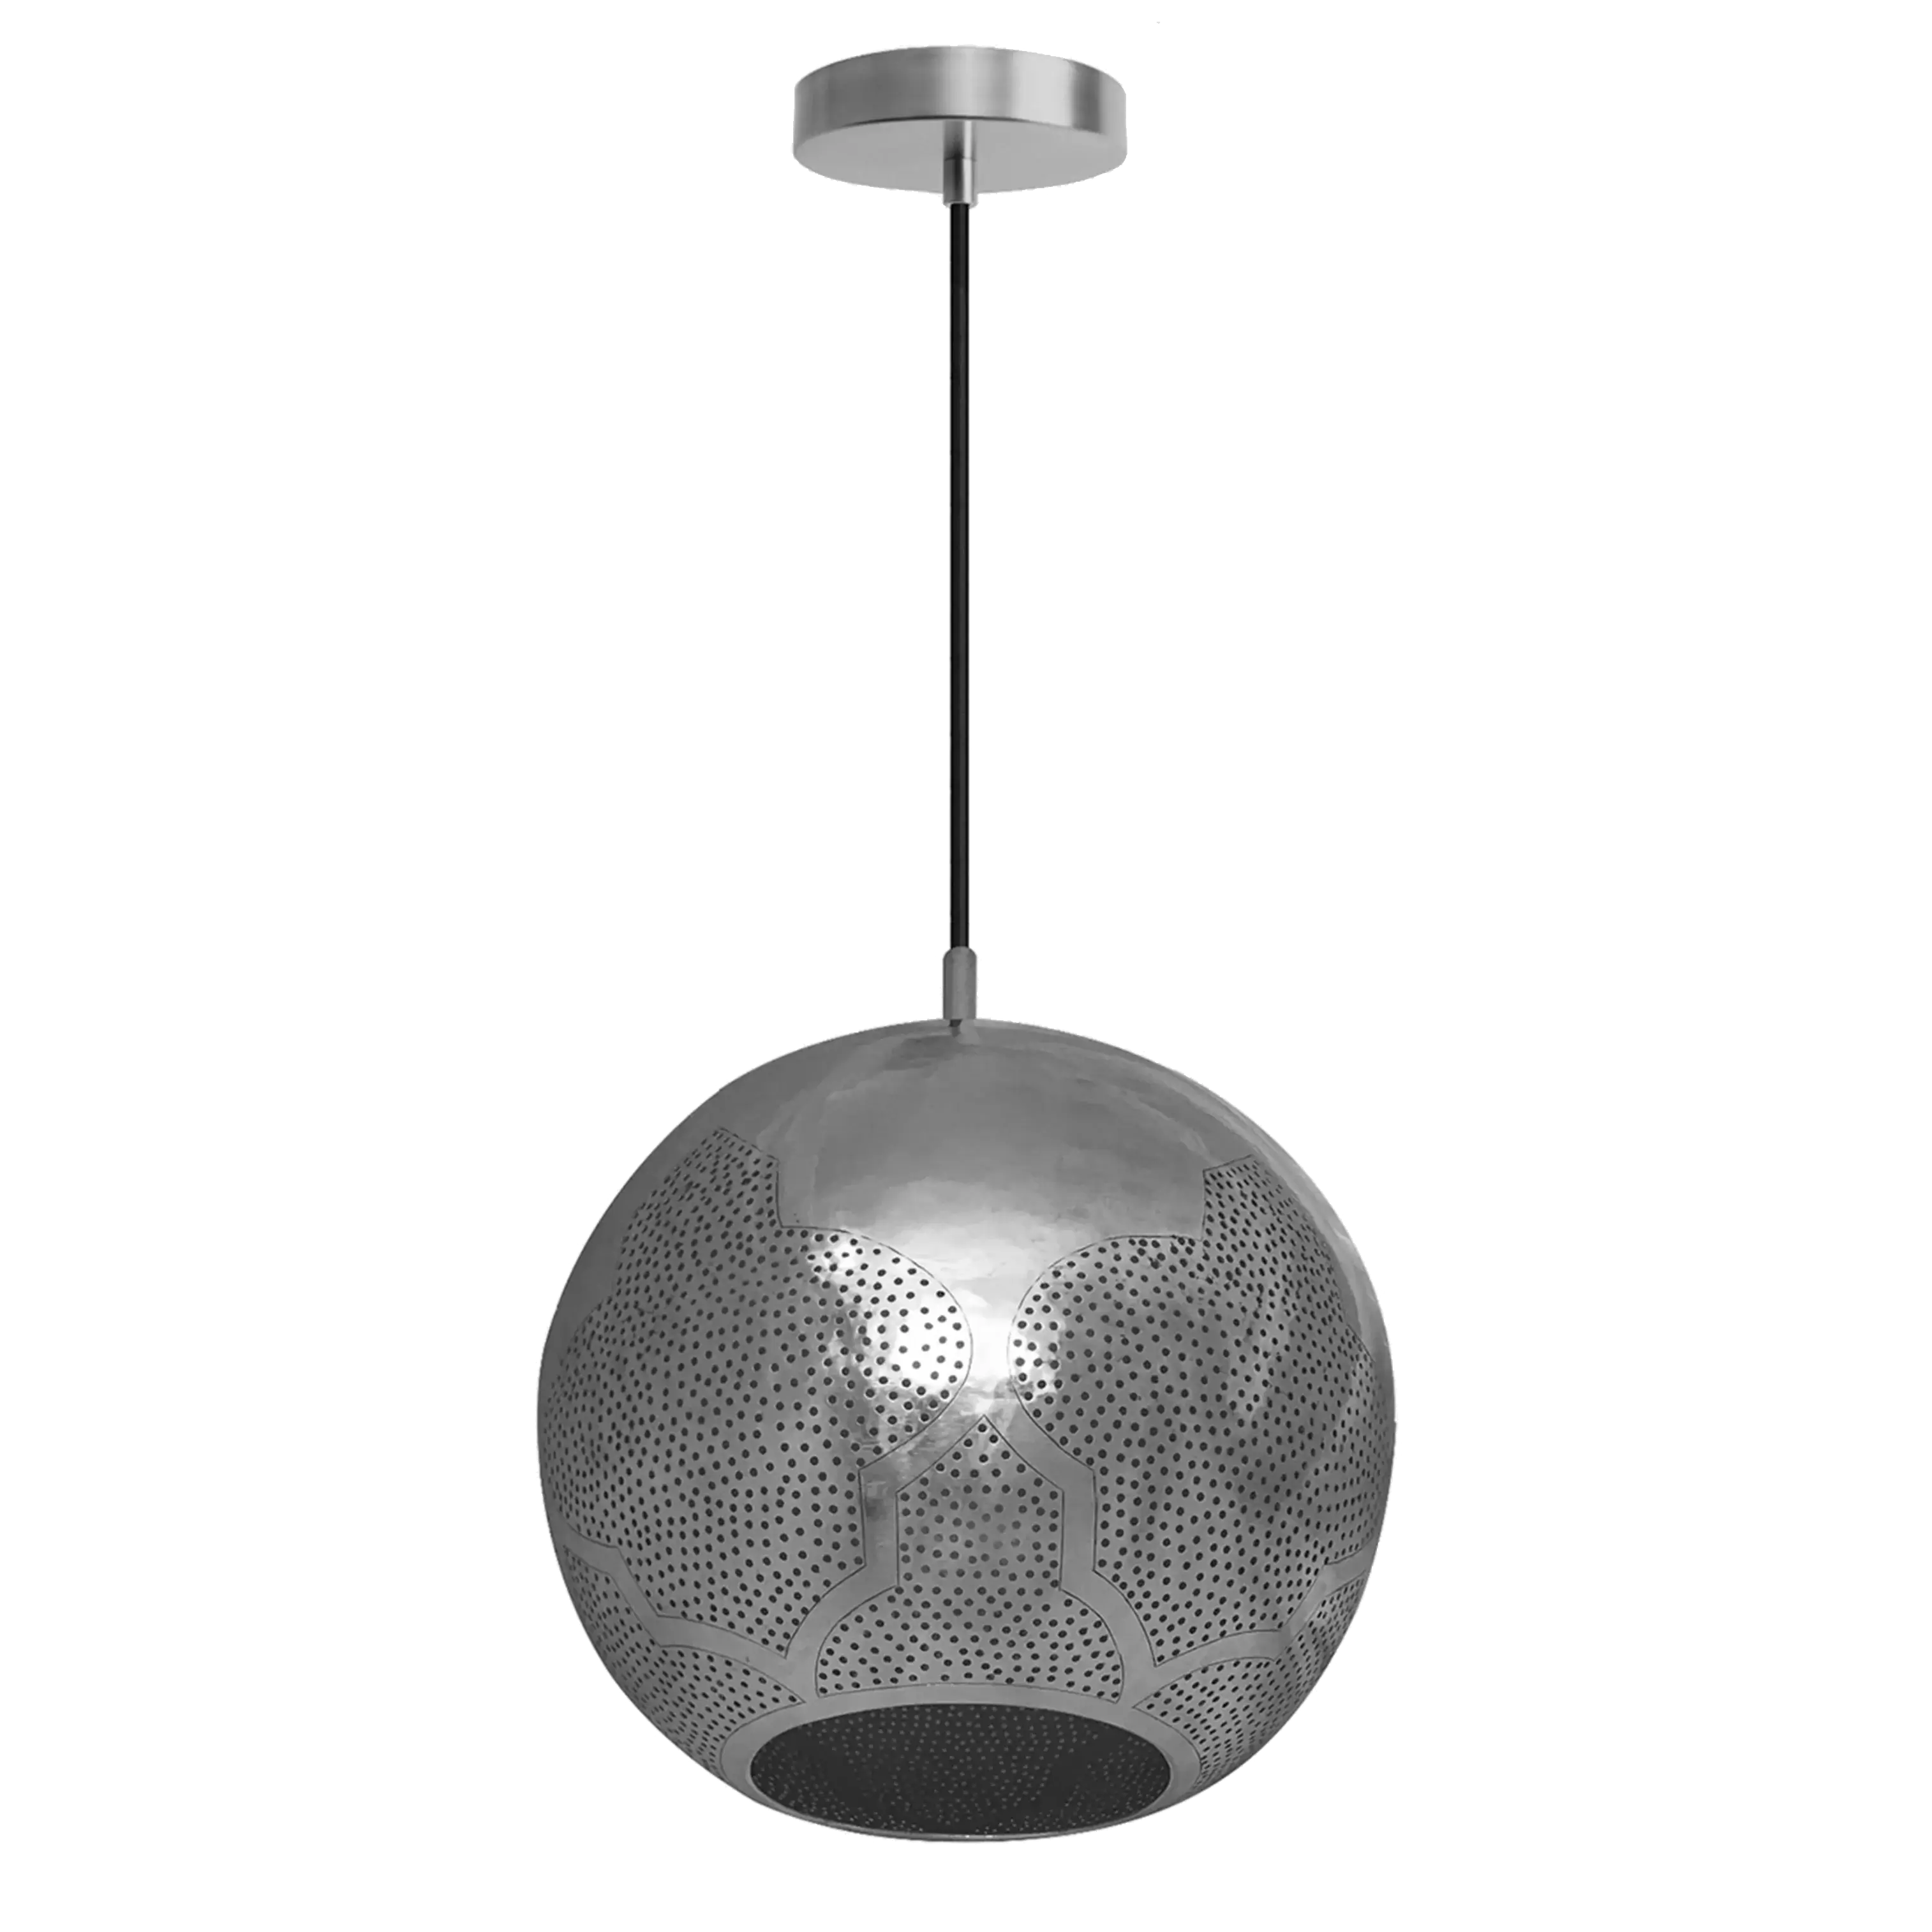 Dounia home Pendant light in  nickel silver  made of Metal, Model: Najma reversed